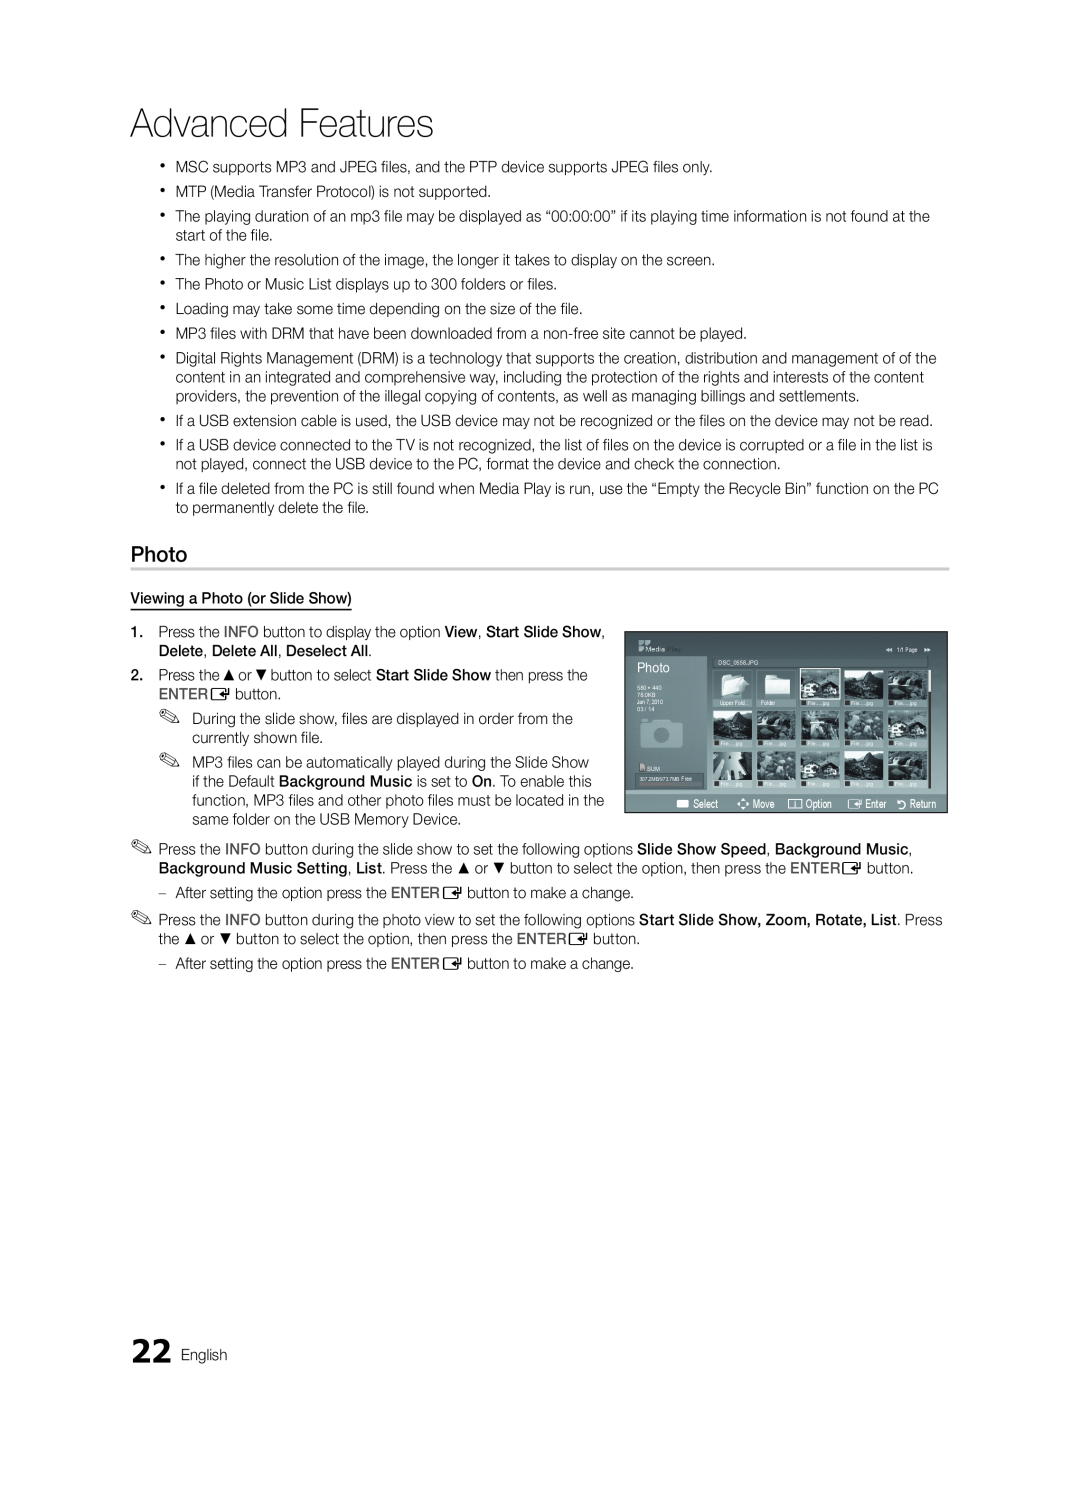 Samsung BN68-02620B-06 user manual Photo, Advanced Features, Select, nMove, jOption, EEnter 